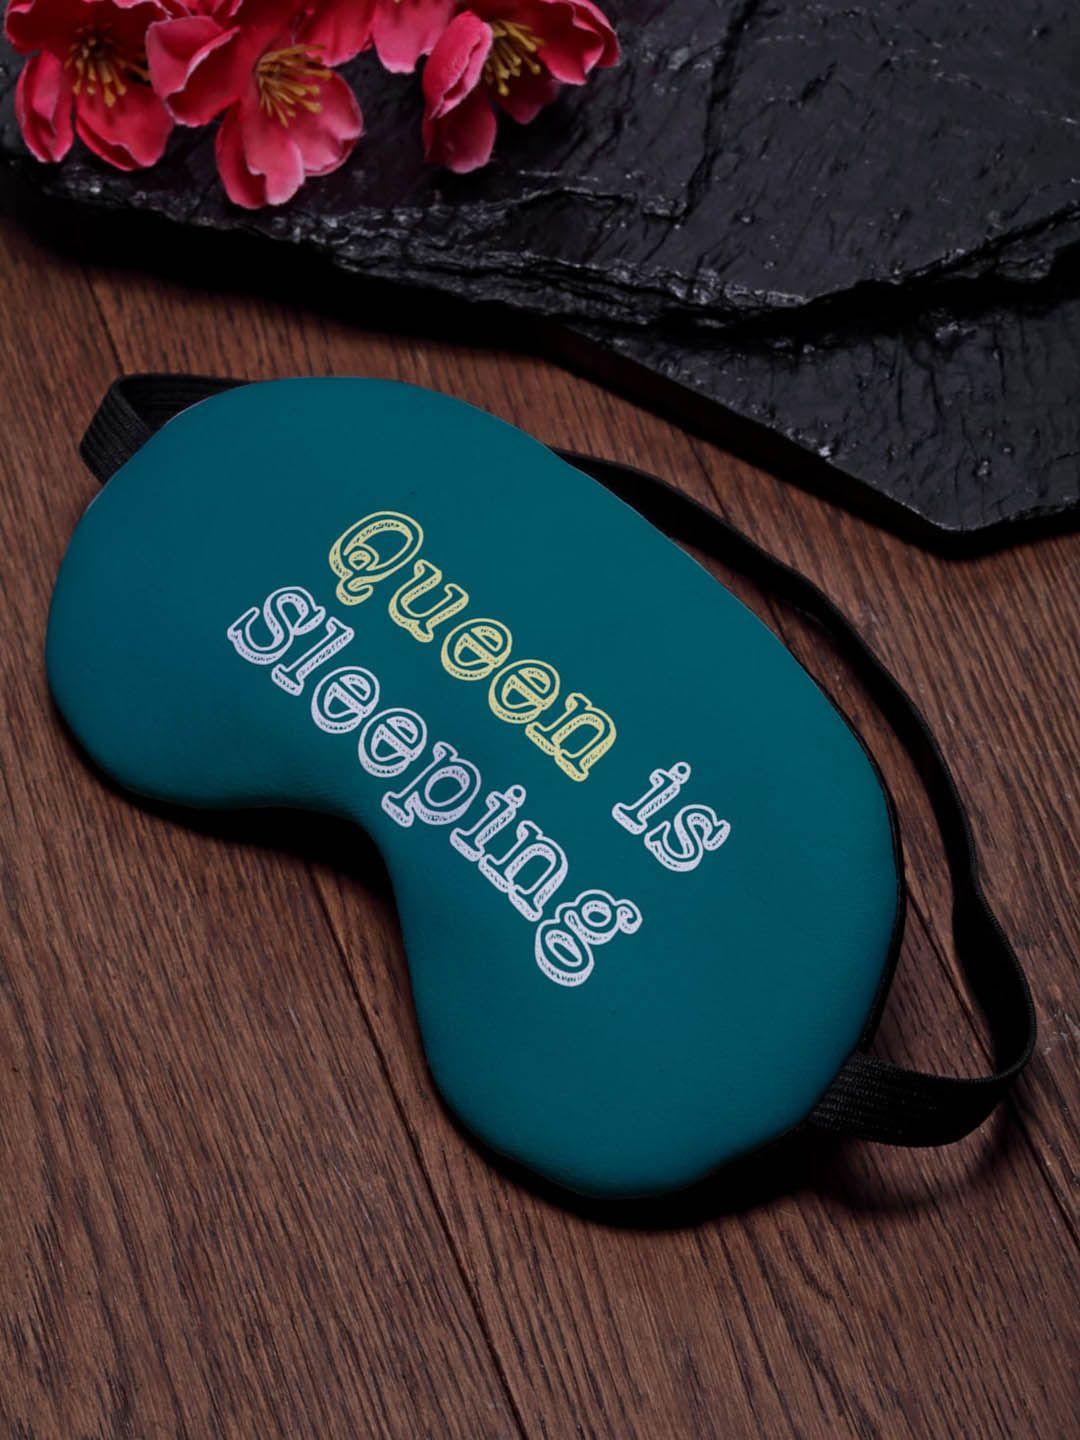 ferosh green queen is sleeping printed sleeping eye mask